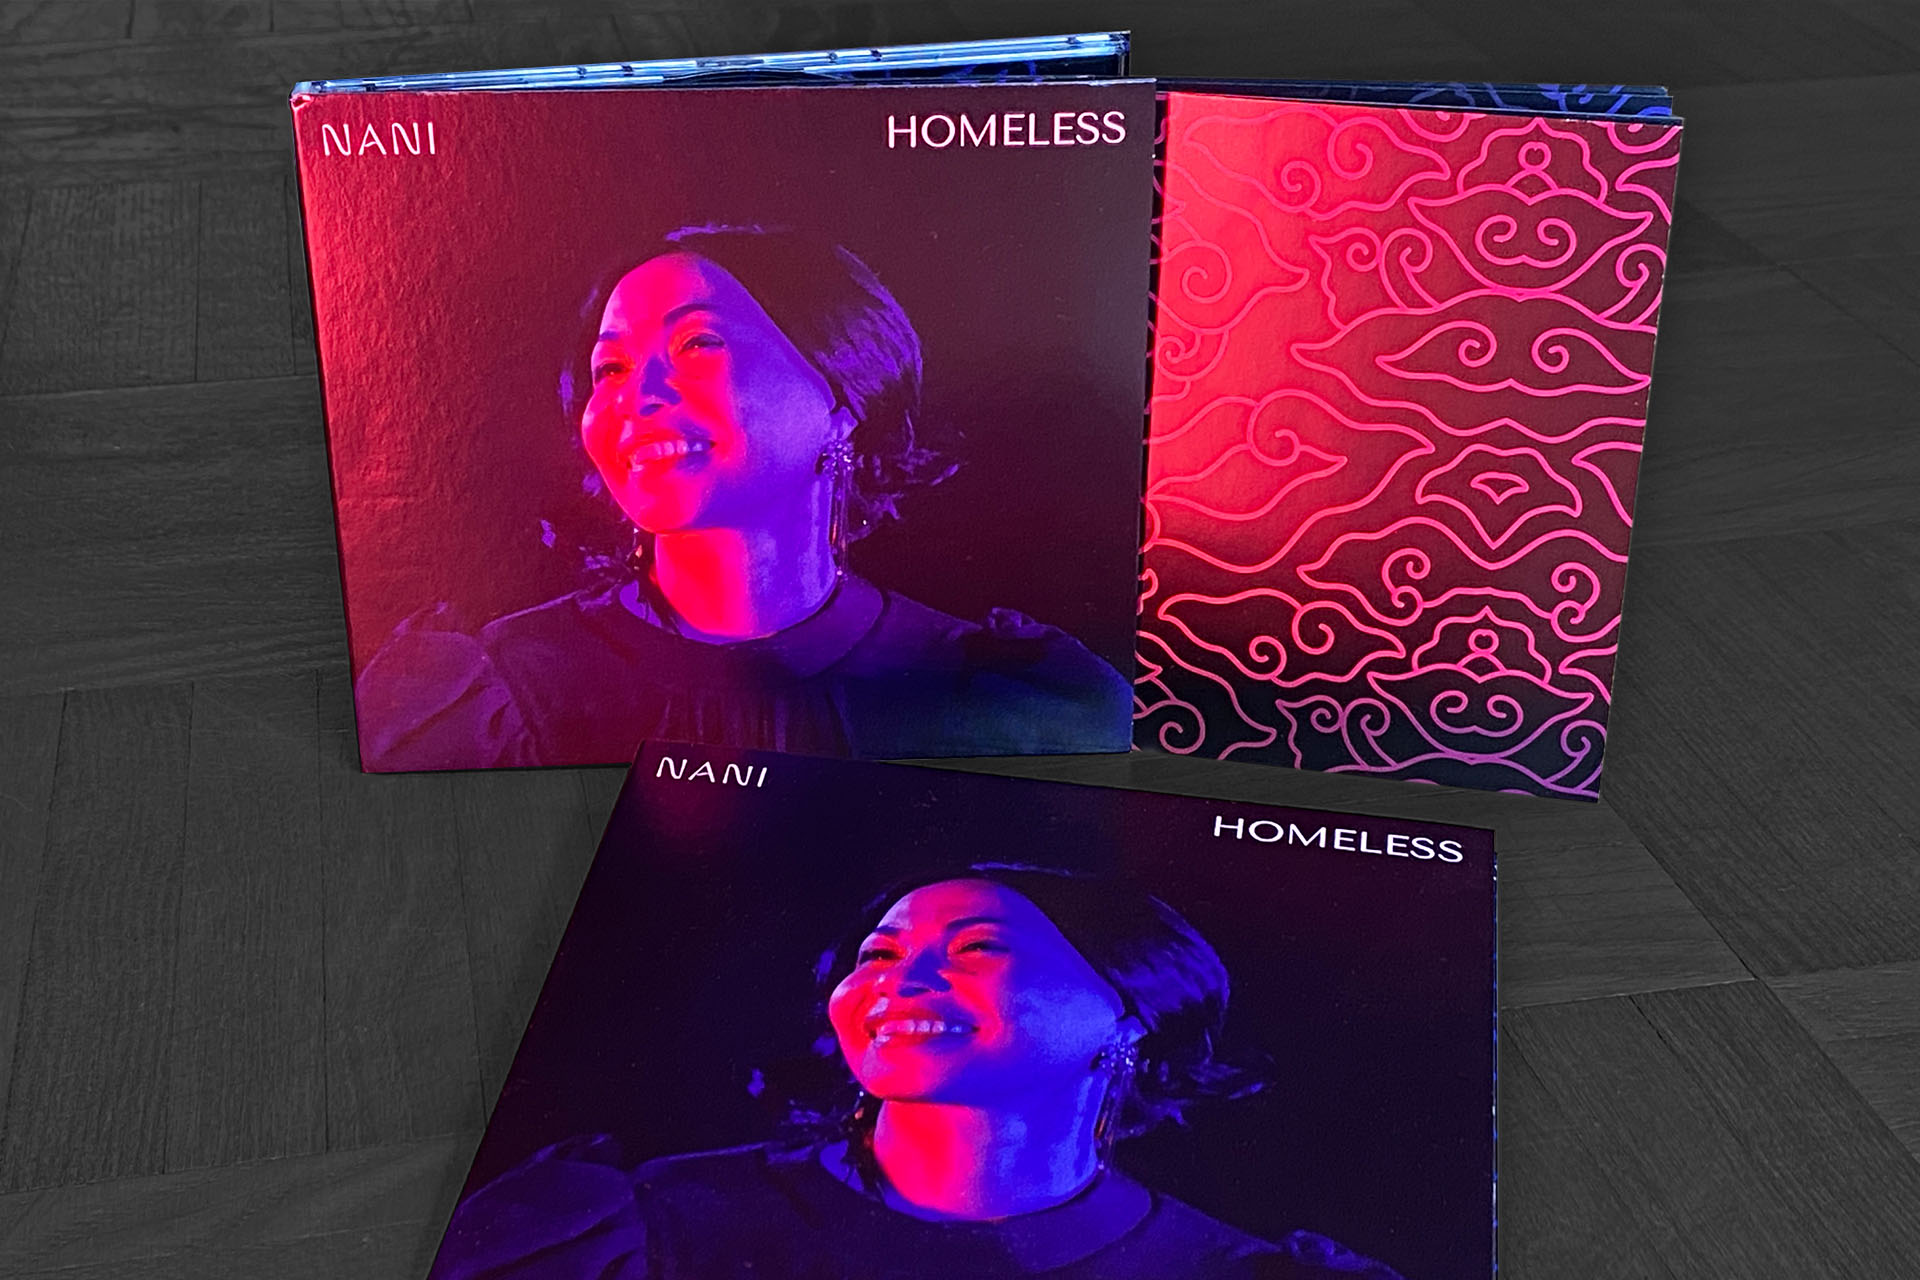 Nani Homeless Digipak Album Packaging